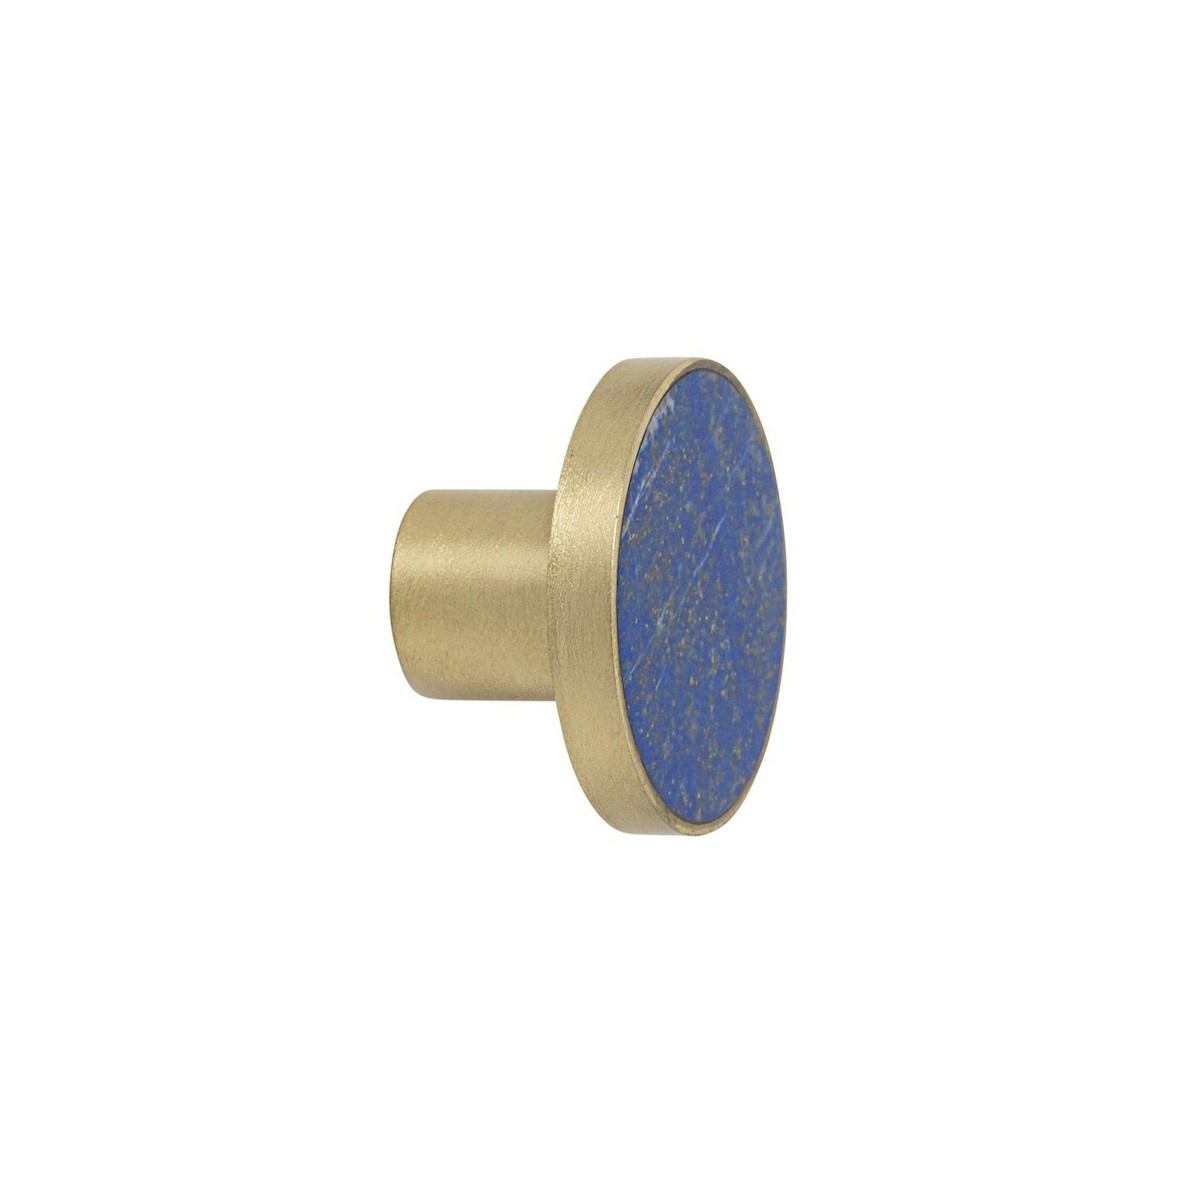 L - brass/stone hook - blue lapis lazuli